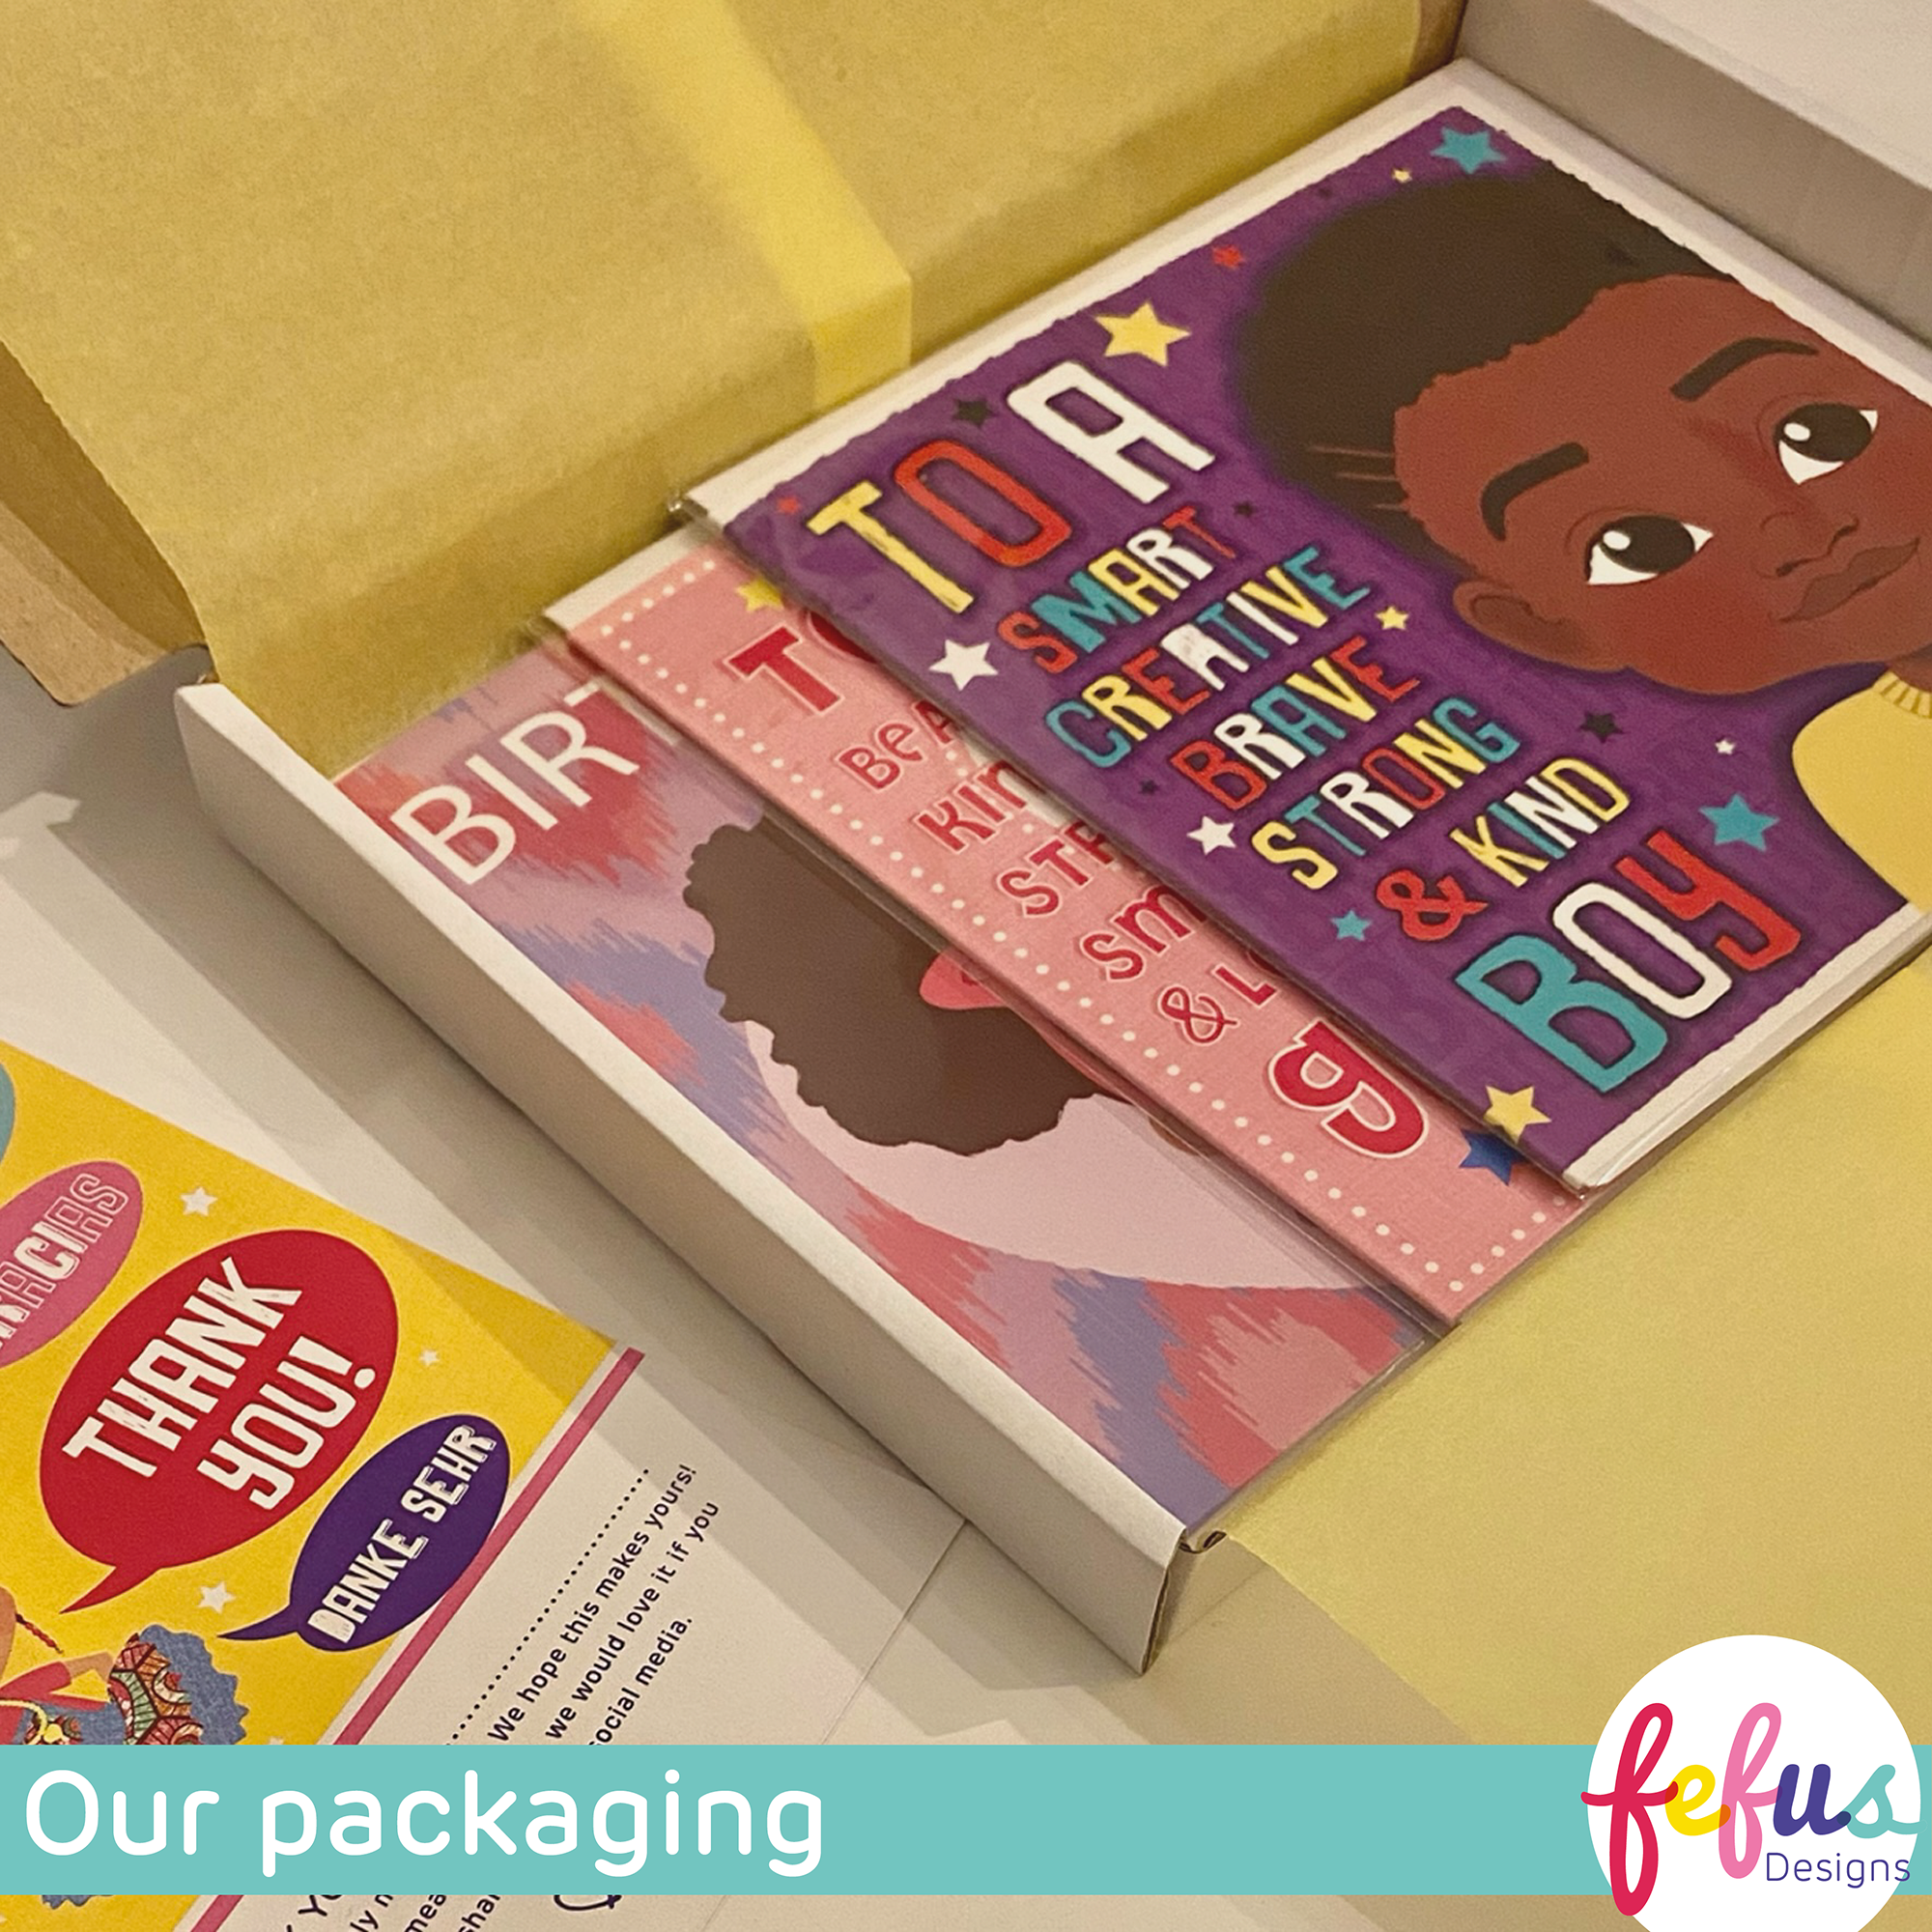 Deja - Afro Puffs Girls - Black Kids Christmas Card | Fefus designs